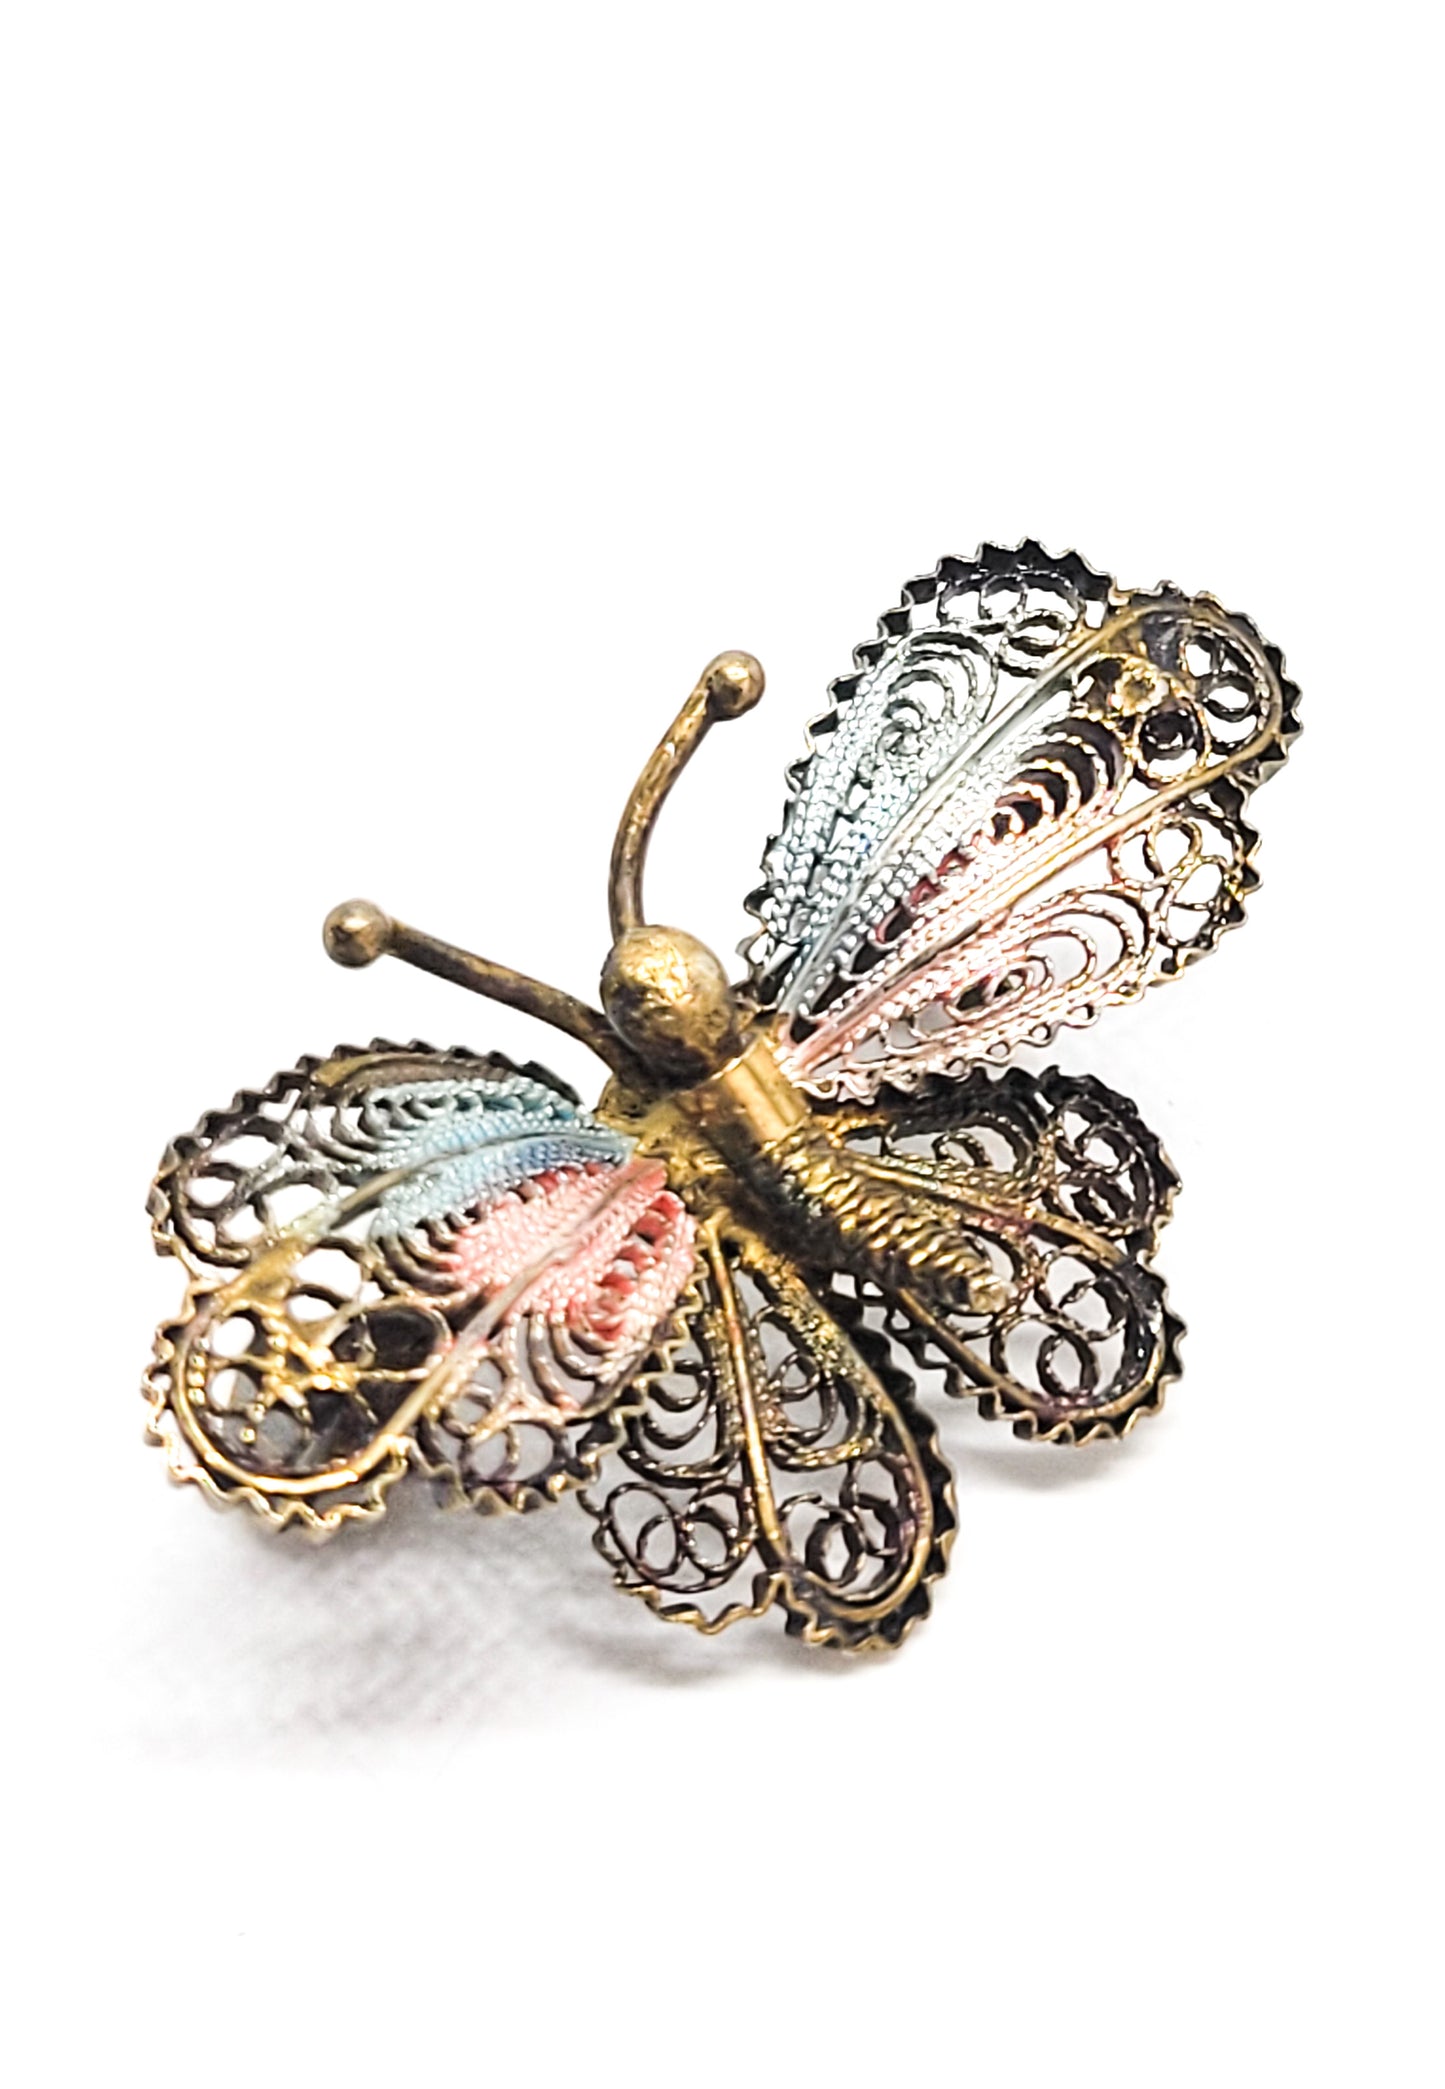 Signed spun silver enamel 800 stamped vintage butterfly brooch